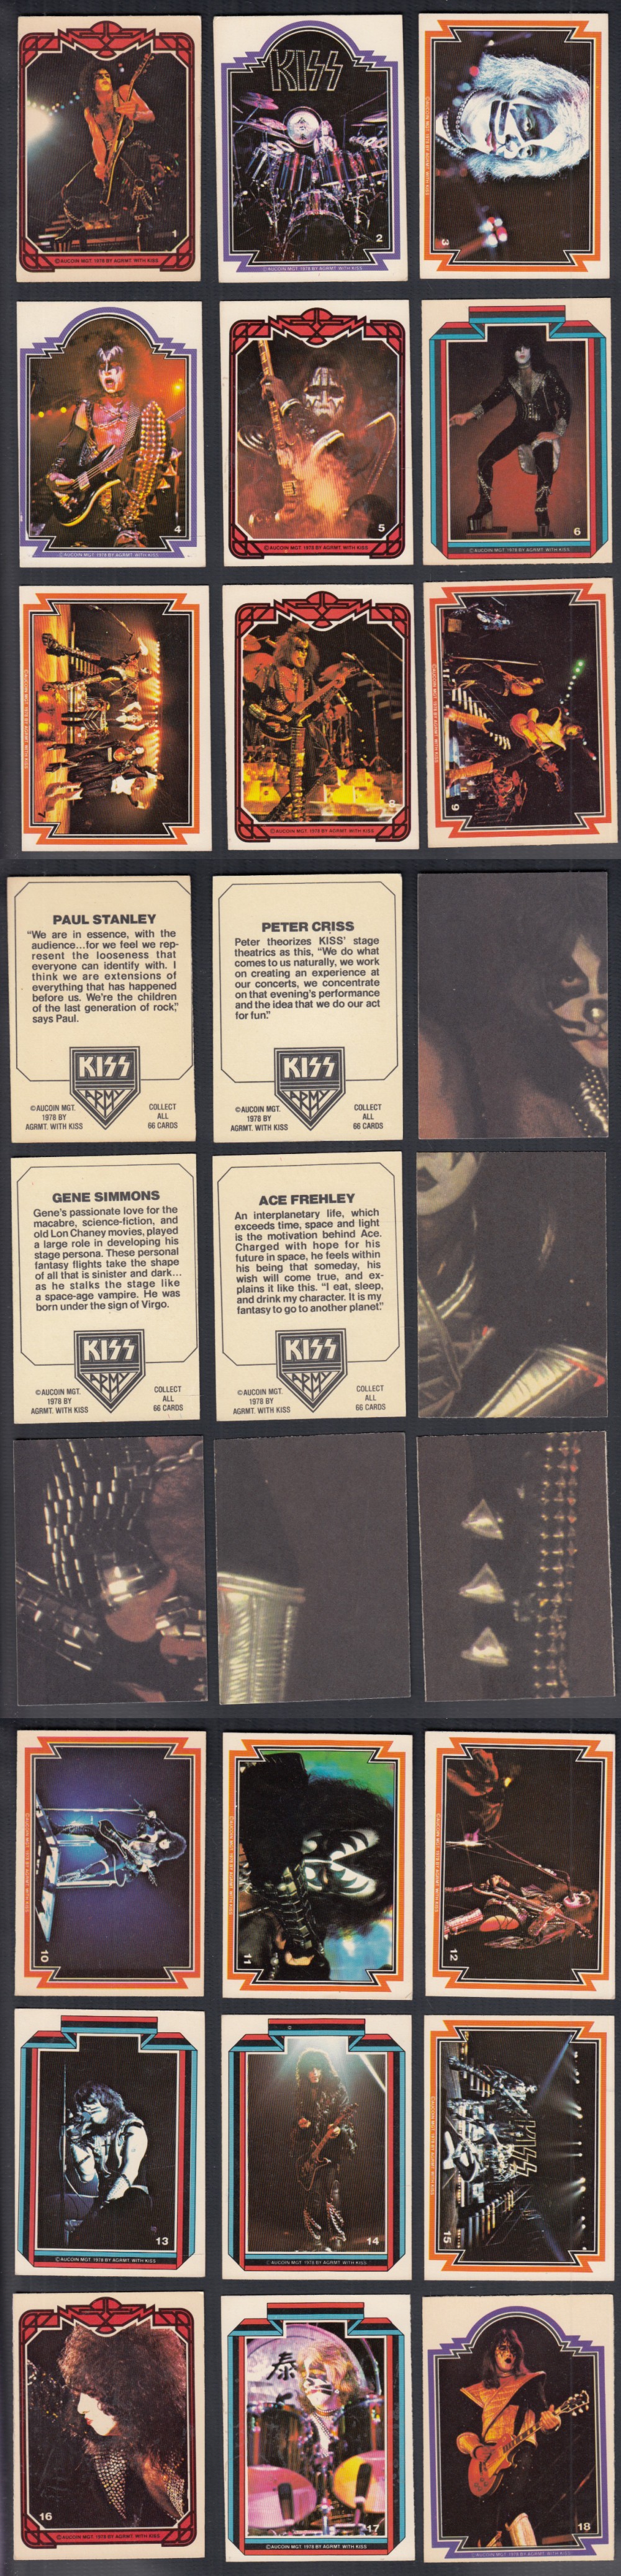 1978 DONRUSS KISS SERIES 2 CARD FULL SET 66/66 photo